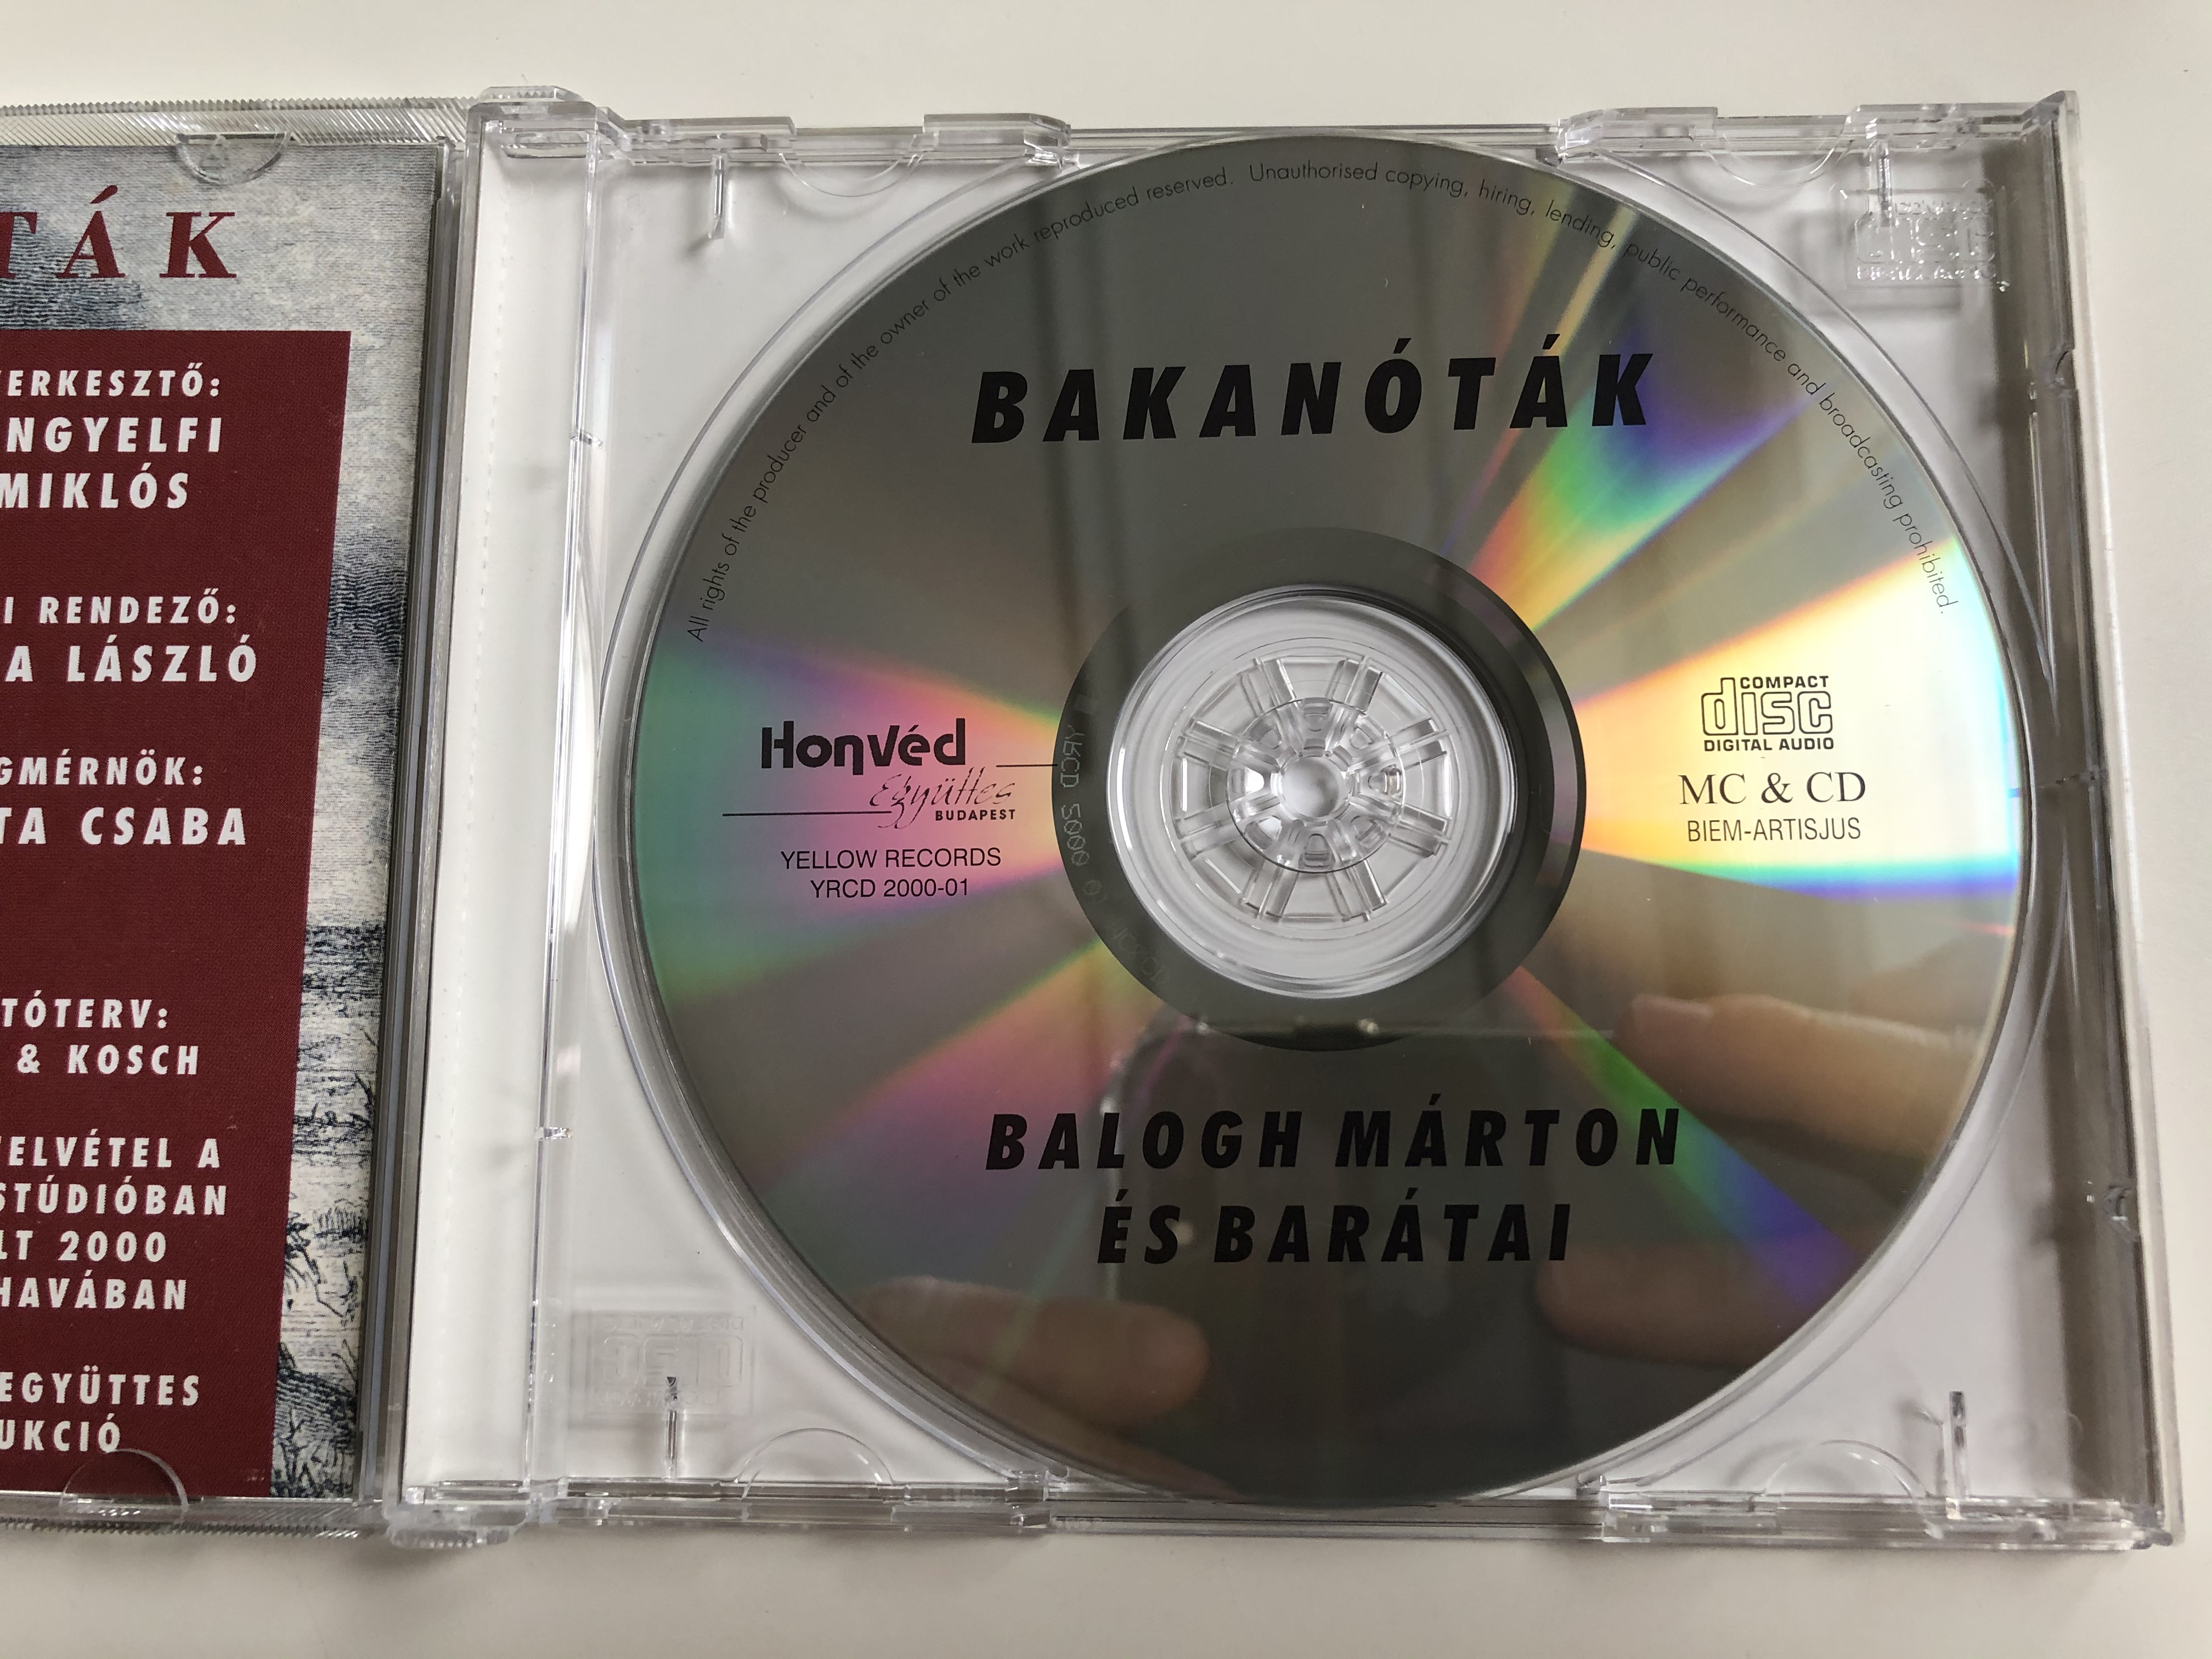 bakan-t-k-balogh-m-rton-s-bar-tai-yellow-records-audio-cd-2000-yrcd-2000-01-5-.jpg